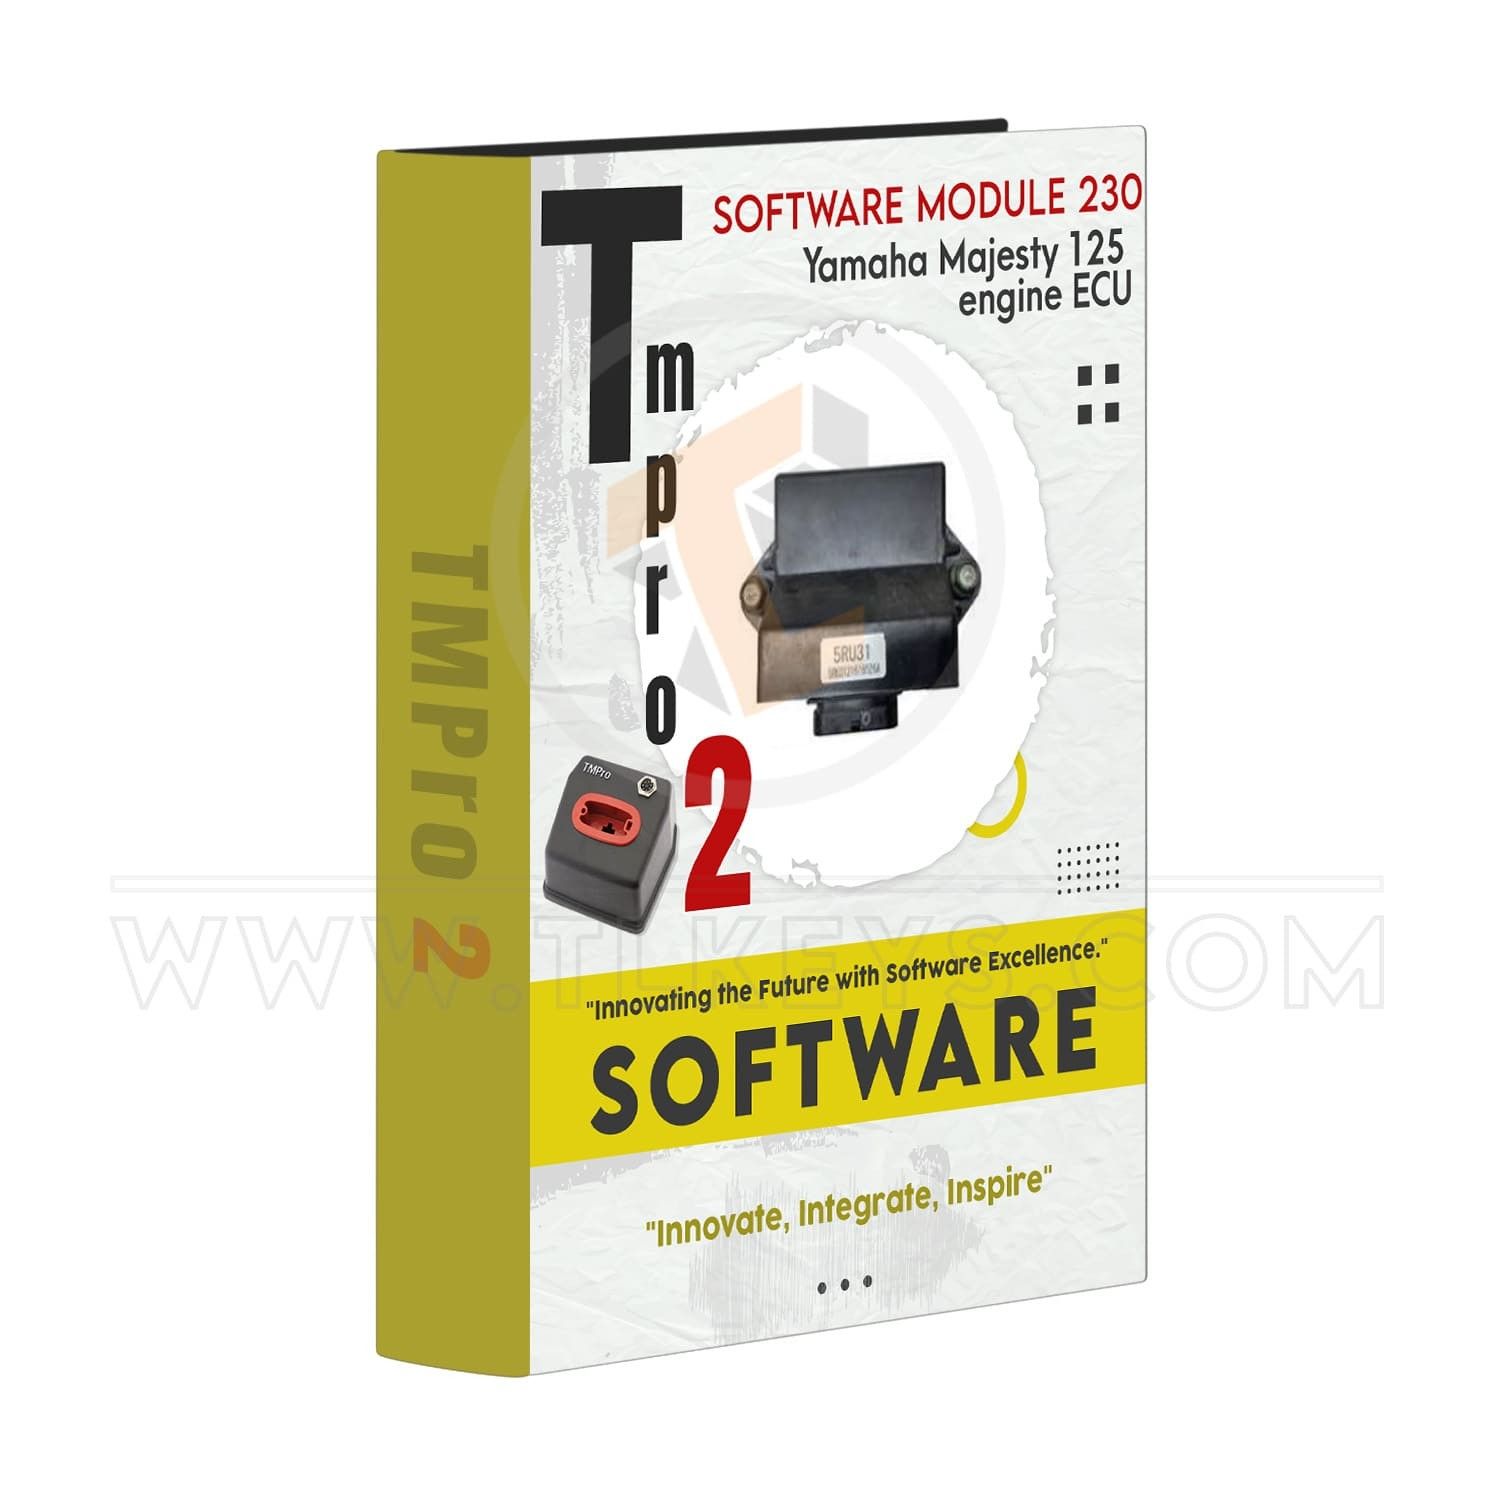 Tmpro 2 Tmpro 2 Software module 230 – Yamaha Majesty 125 engine EC software